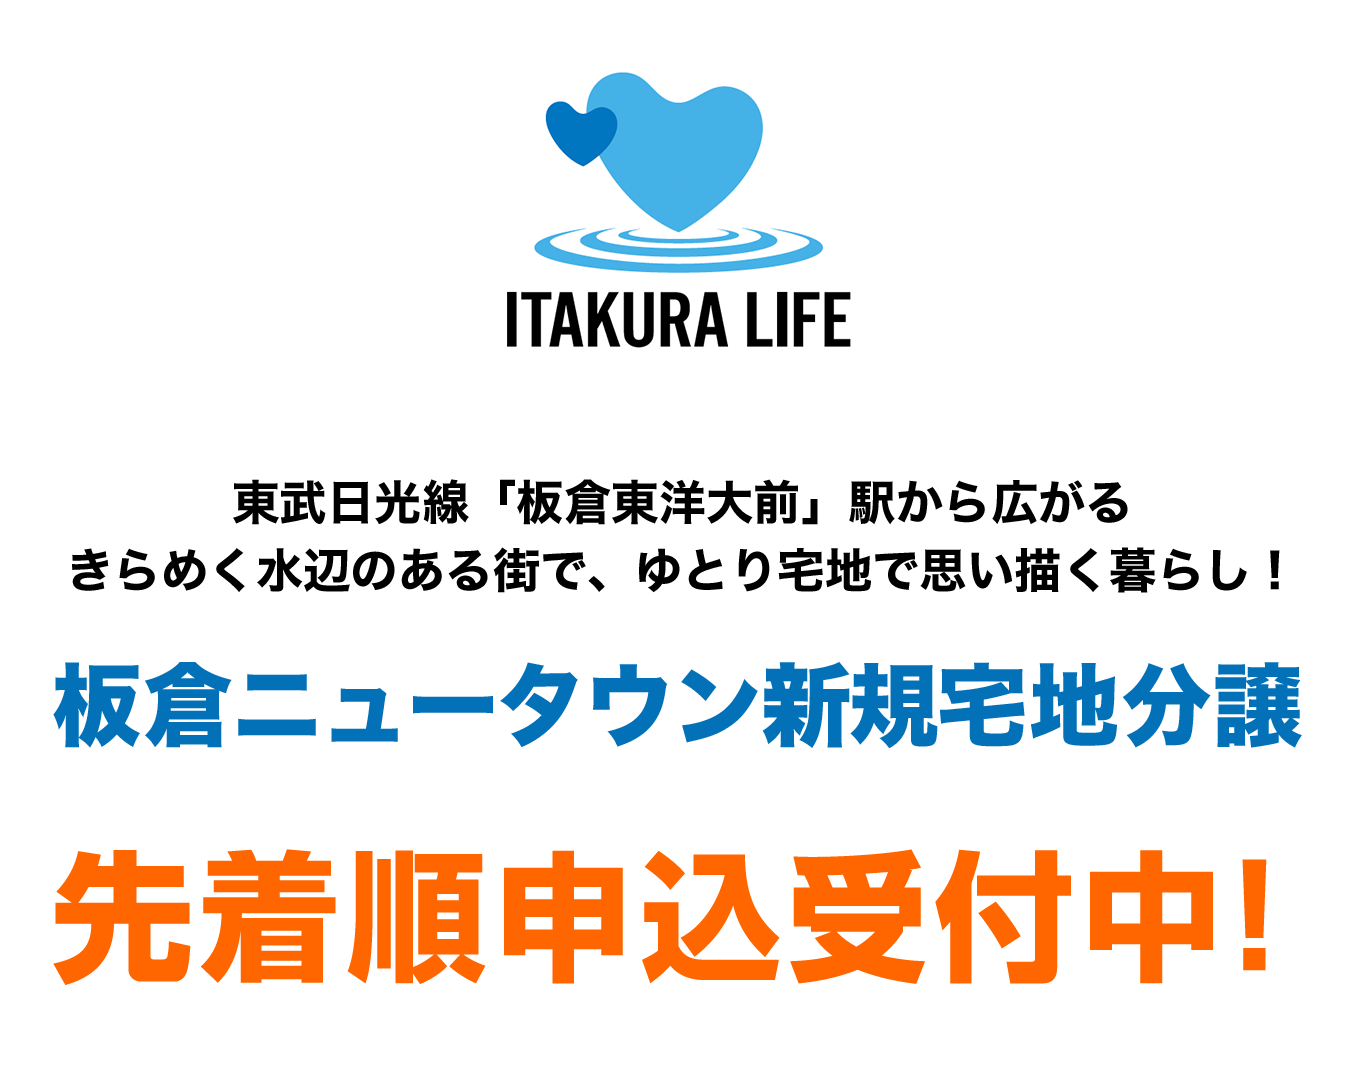 Itakura Life 板倉ライフ トップページ 群馬県の宅地分譲 板倉ニュータウン それぞれの家族のライフスタイルで暮らす街